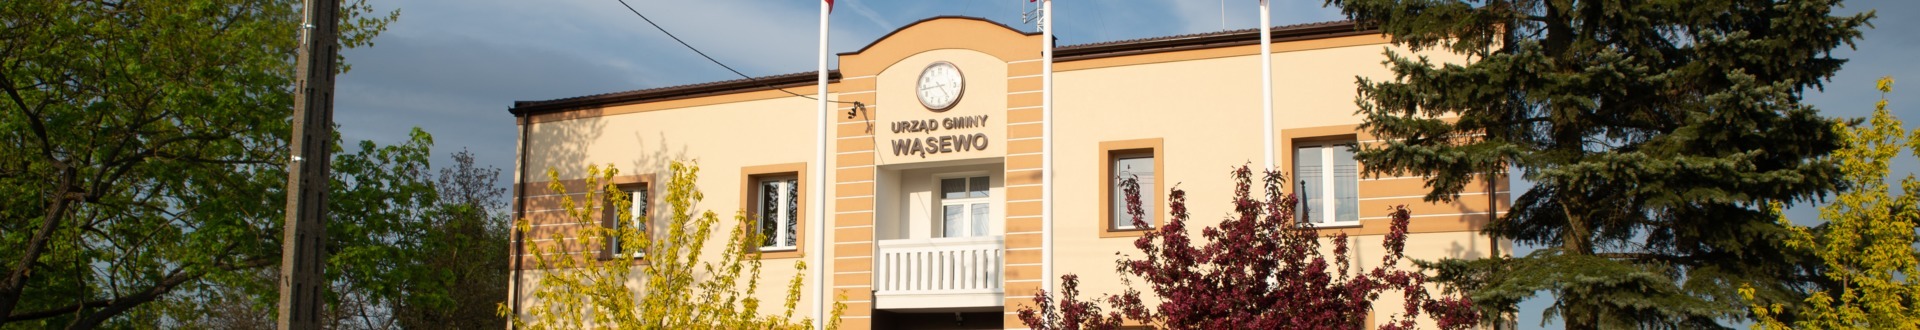 Baner top Gmina Wąsewo - Slide 7